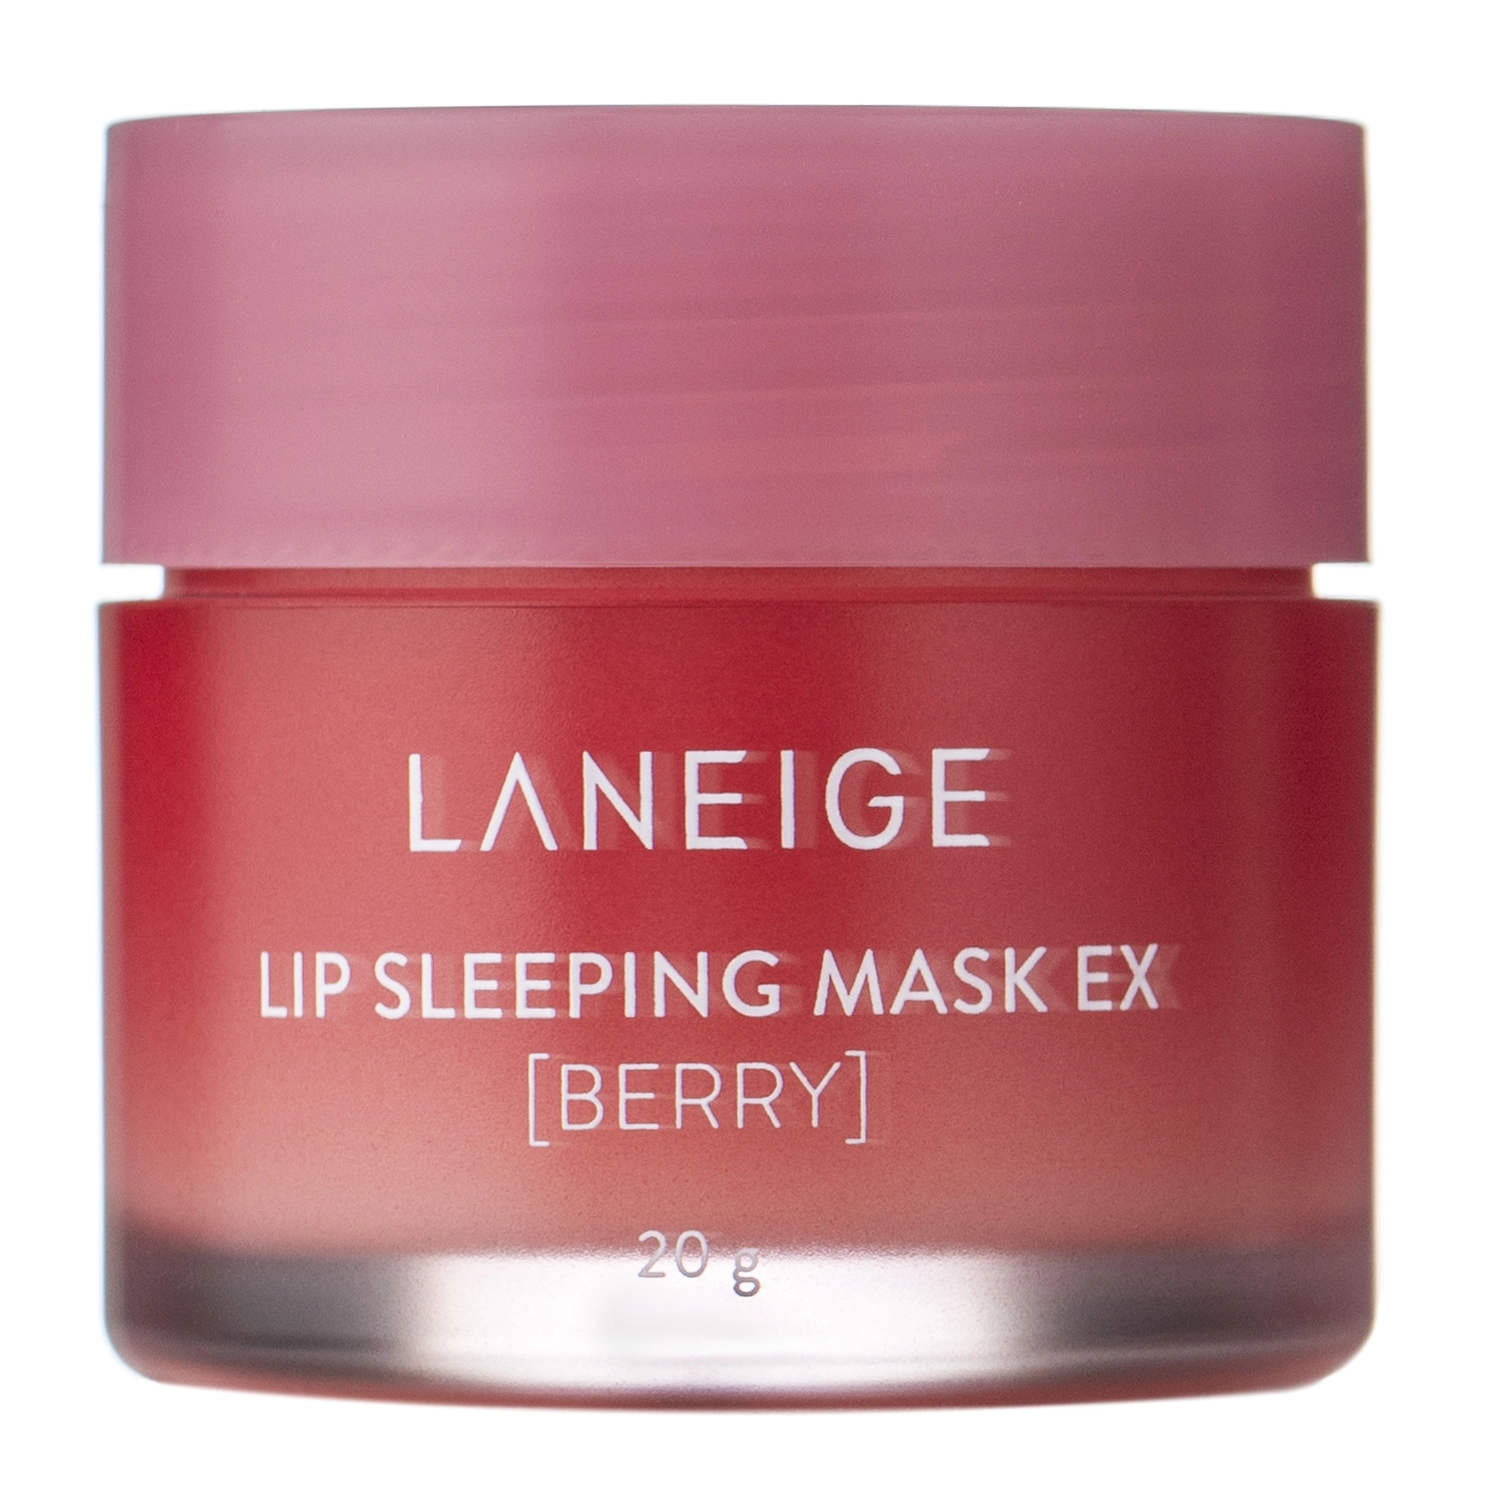 Laneige - Lip Sleeping Mask EX - Berry - Maska Intensywnie Regenerująca Usta EX - 20g